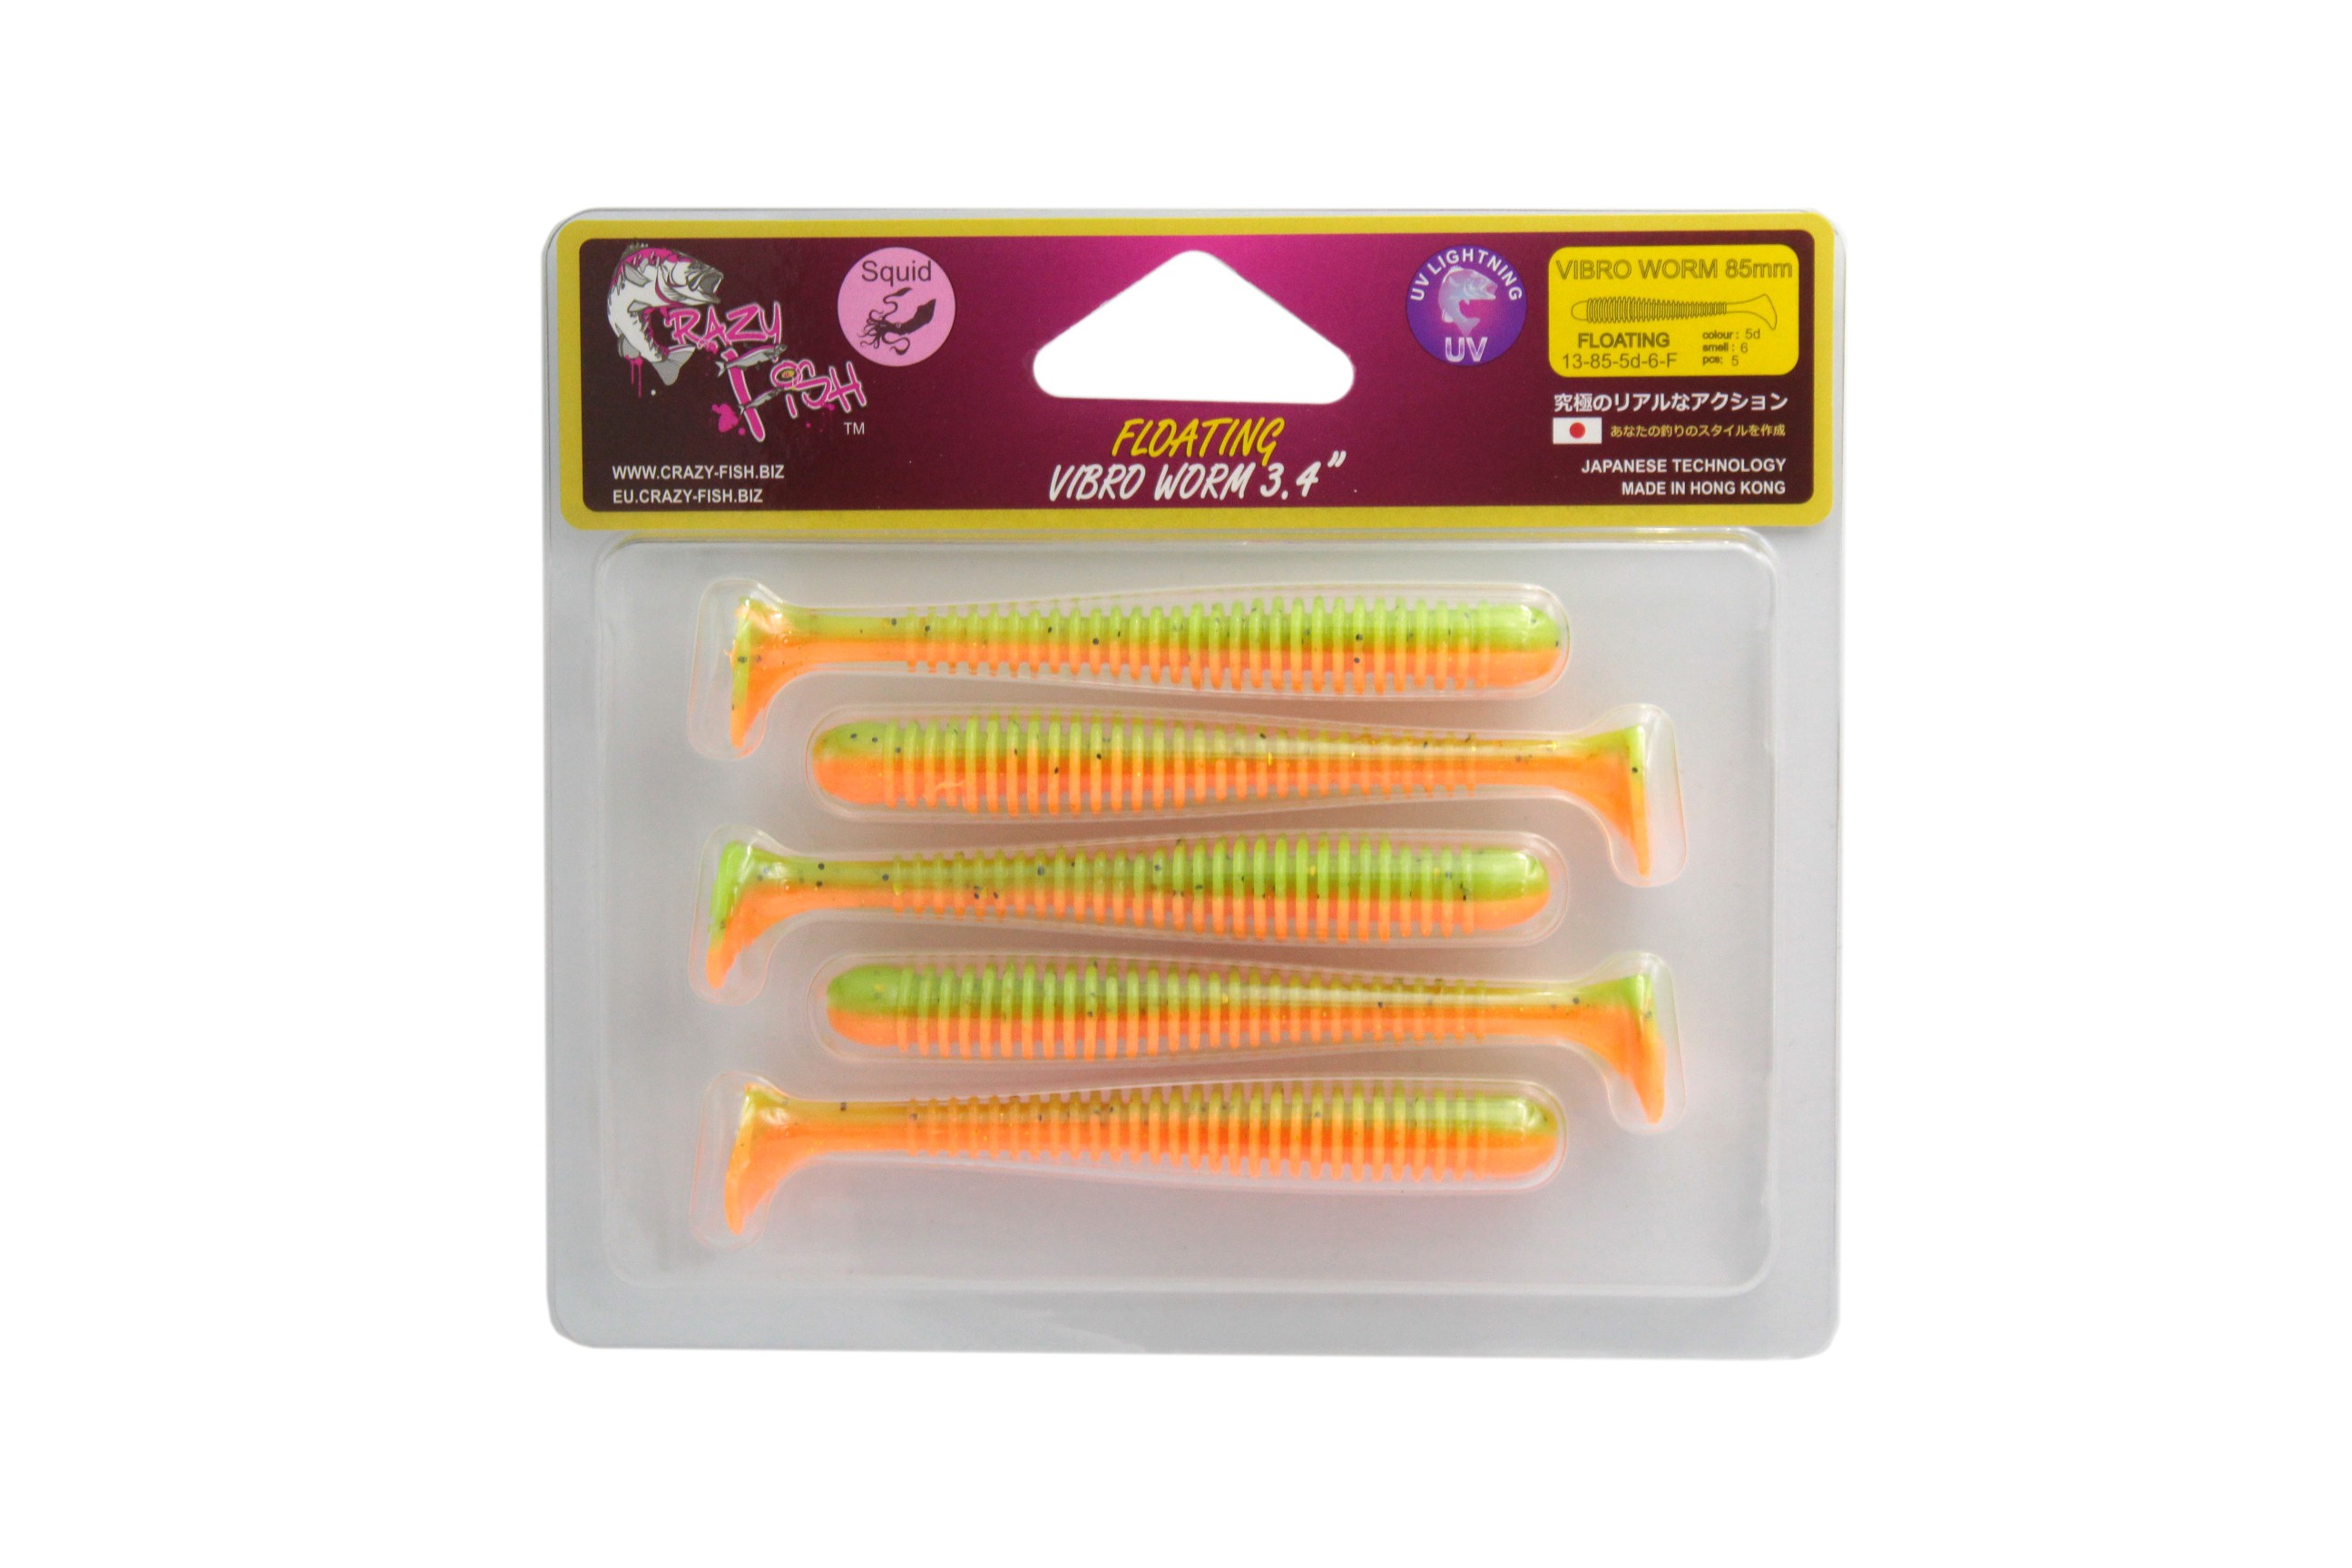 Приманка Crazy Fish Vibro worm 3,4'' F13-85-5D-6 - фото 1